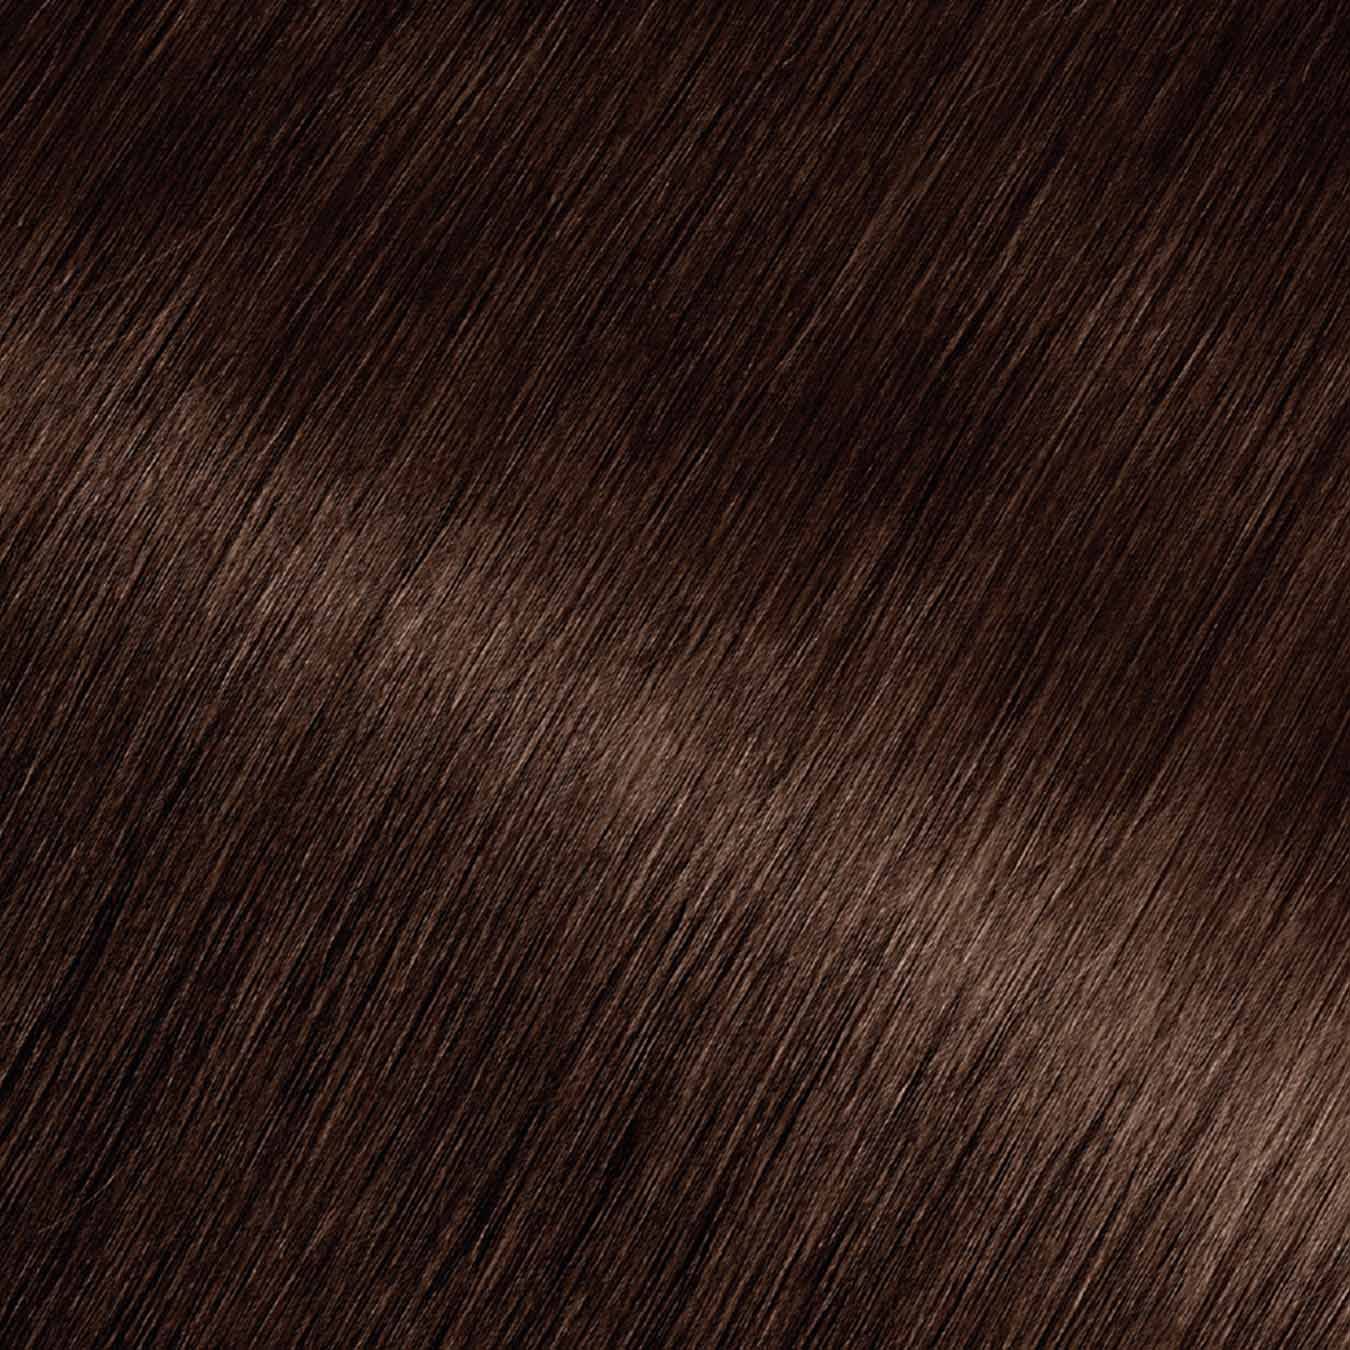 Garnier Olia 4.35 - Dark Golden Mahogany - Powered Permanent Hair Color